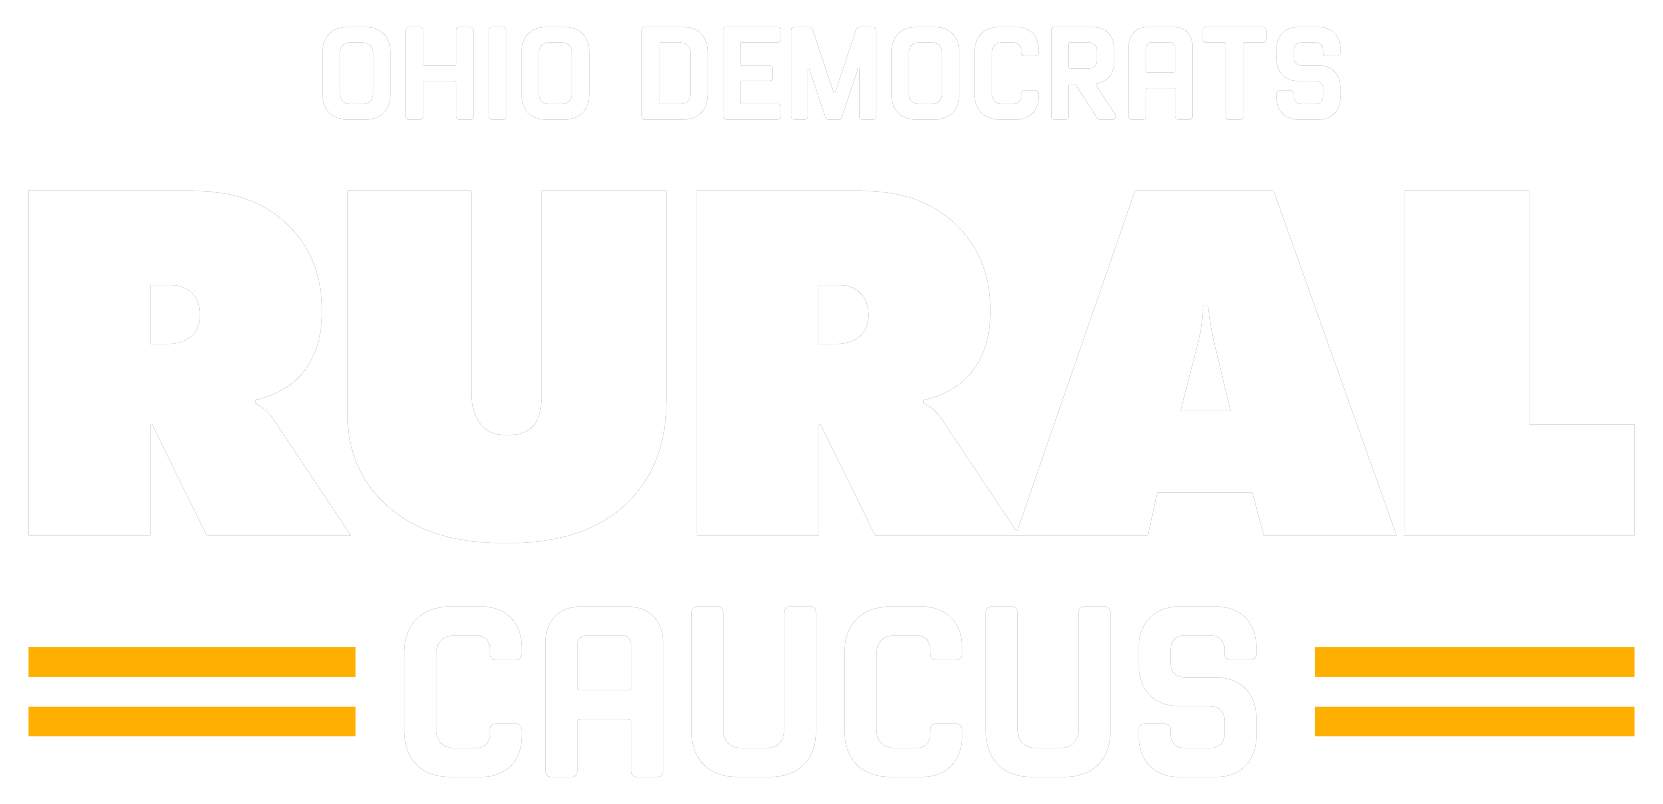 Rural Caucus Signup Form